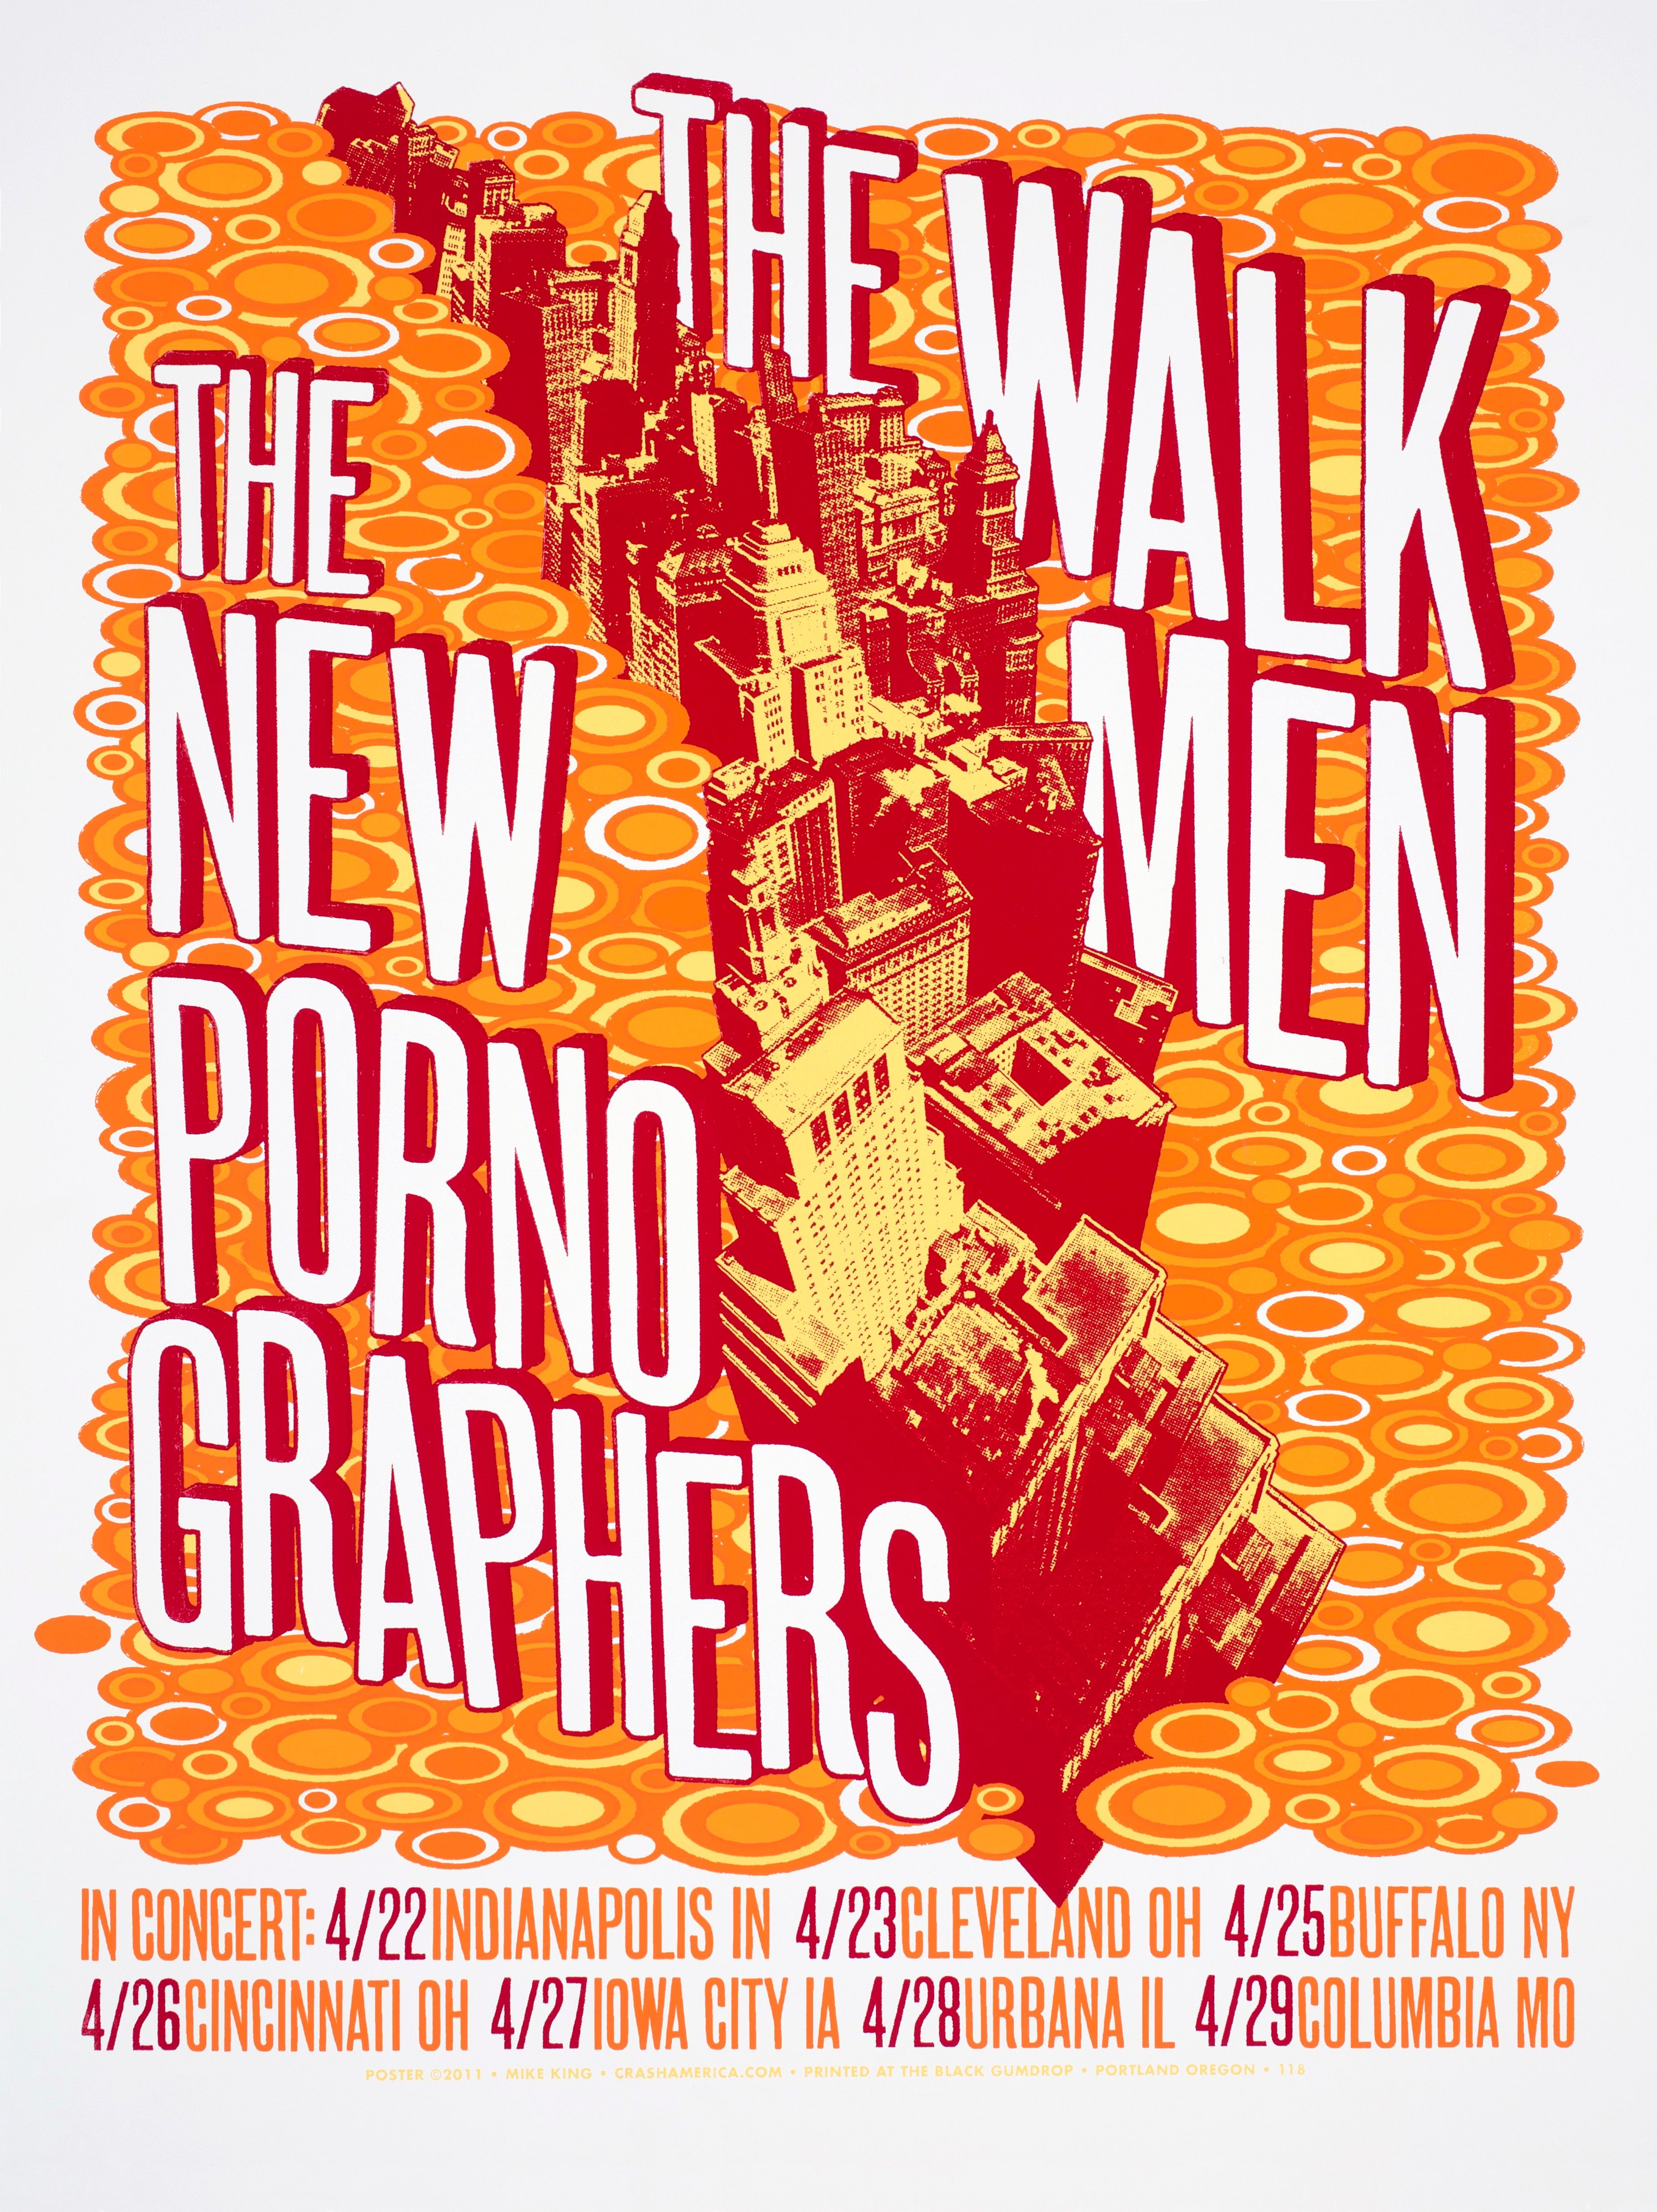 MXP-173.1 Walkmen 2001 Tour  Nov 10 Concert Poster